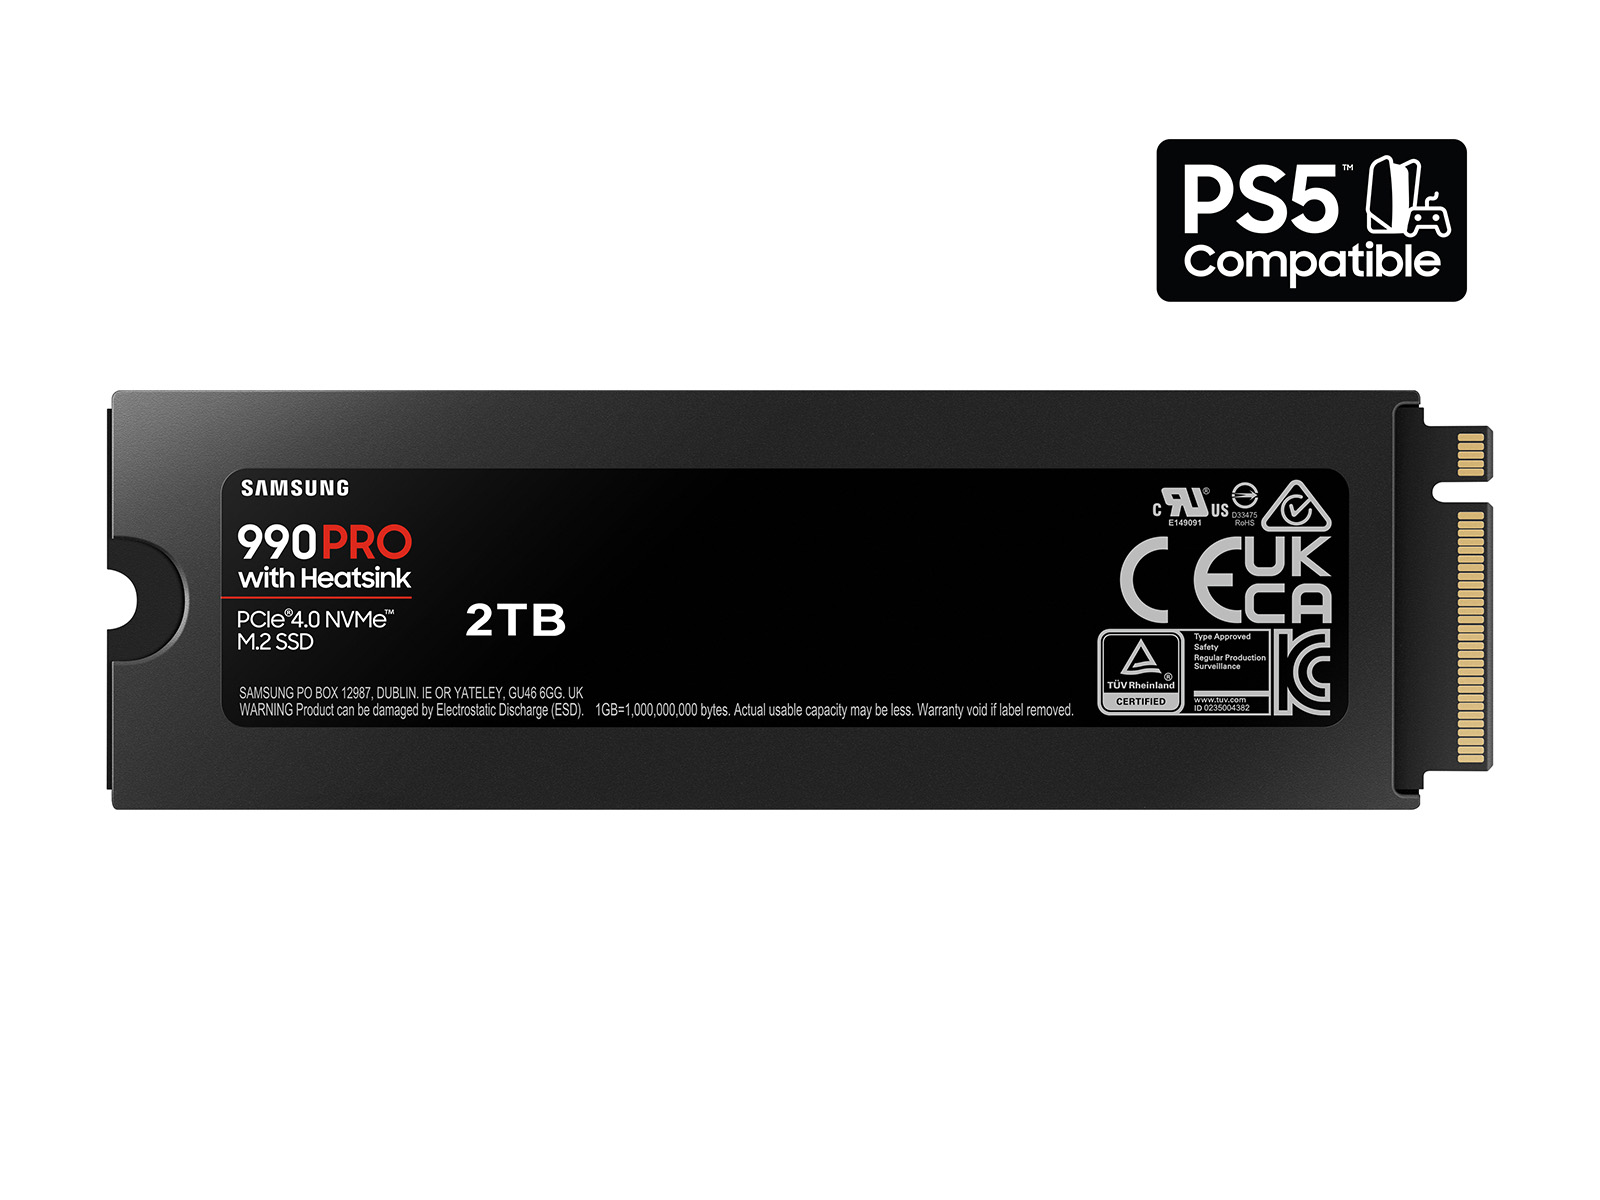 Samsung 990 PRO with Heatsink SSD 2TB